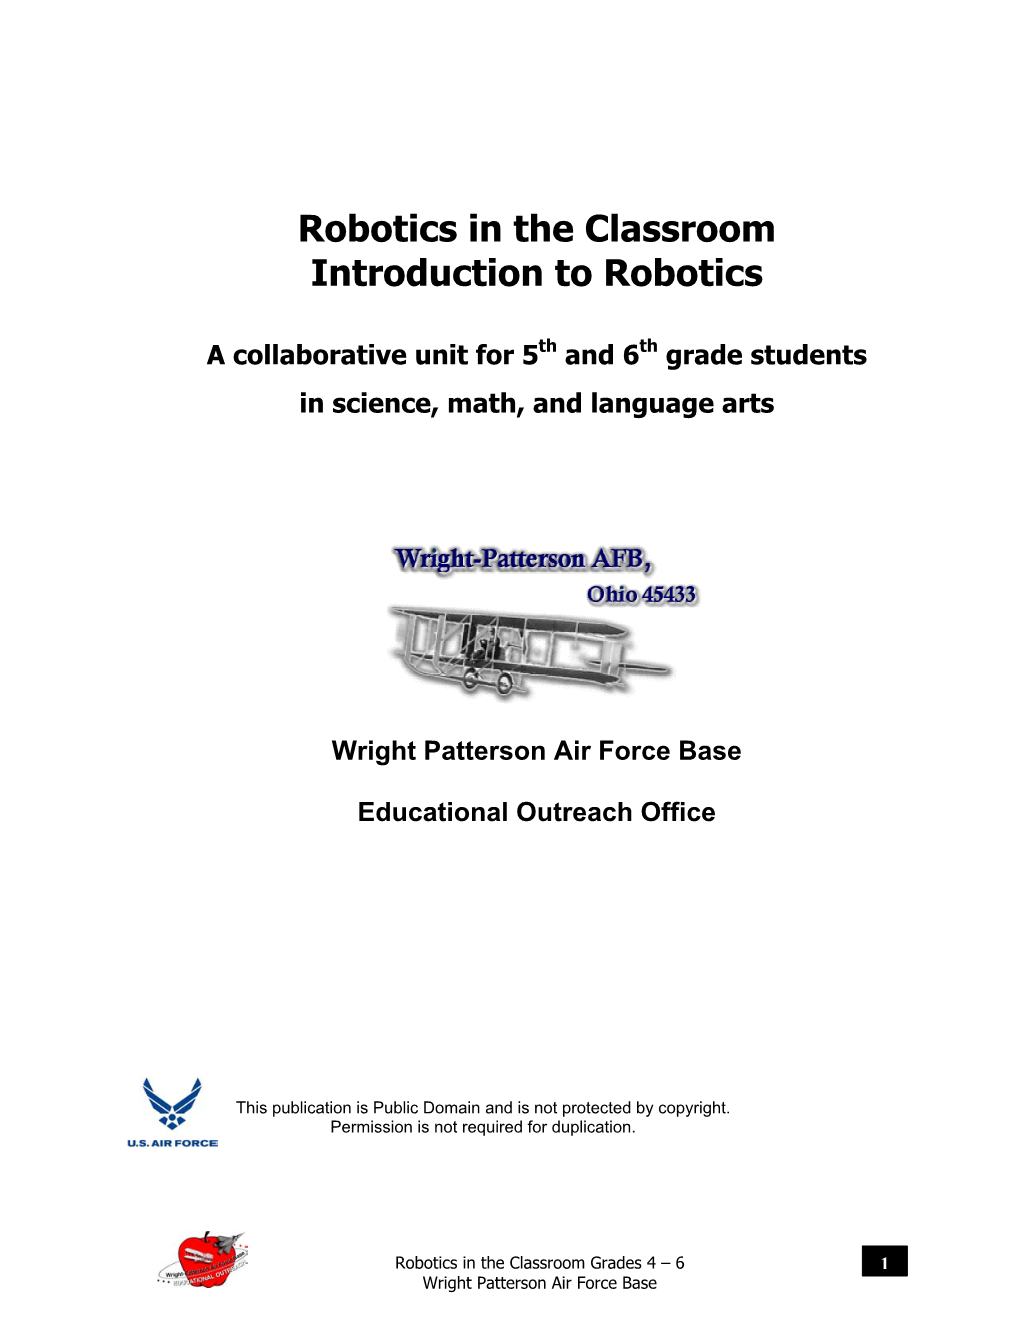 Robotics in the Classroom Introduction to Robotics